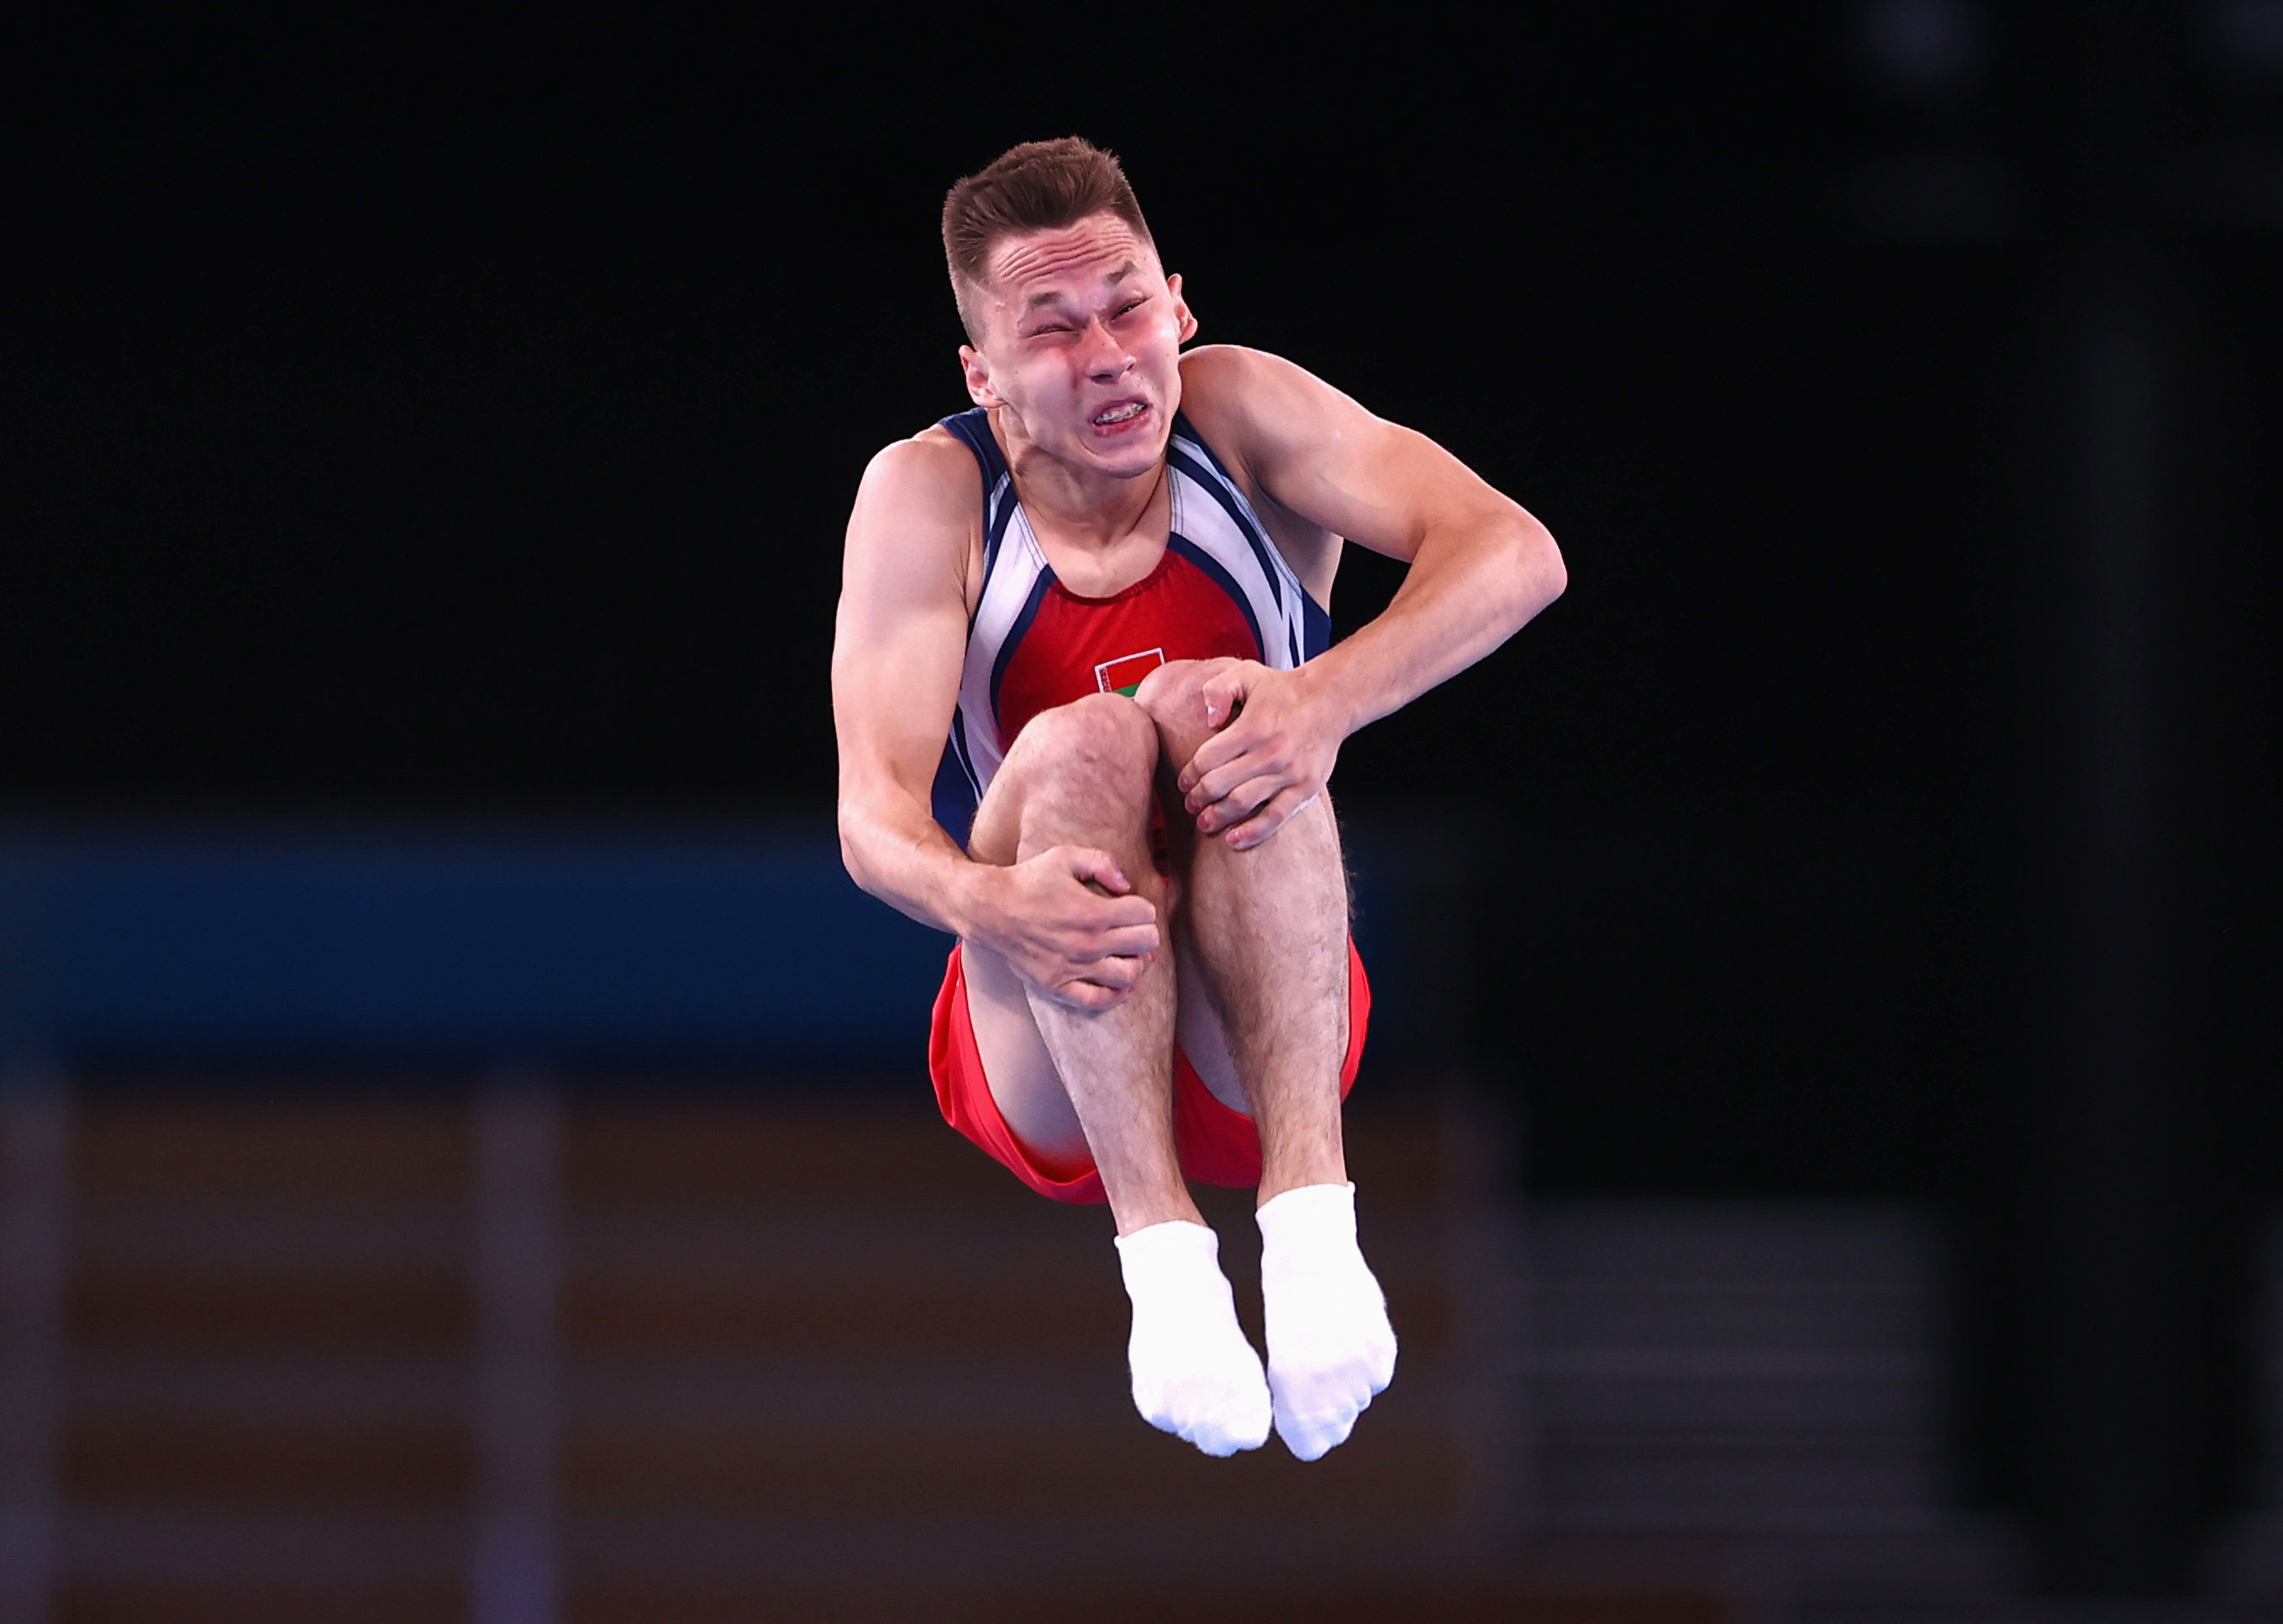 Gymnastics-Litvinovich claims trampoline for Belarus, China silver | Reuters